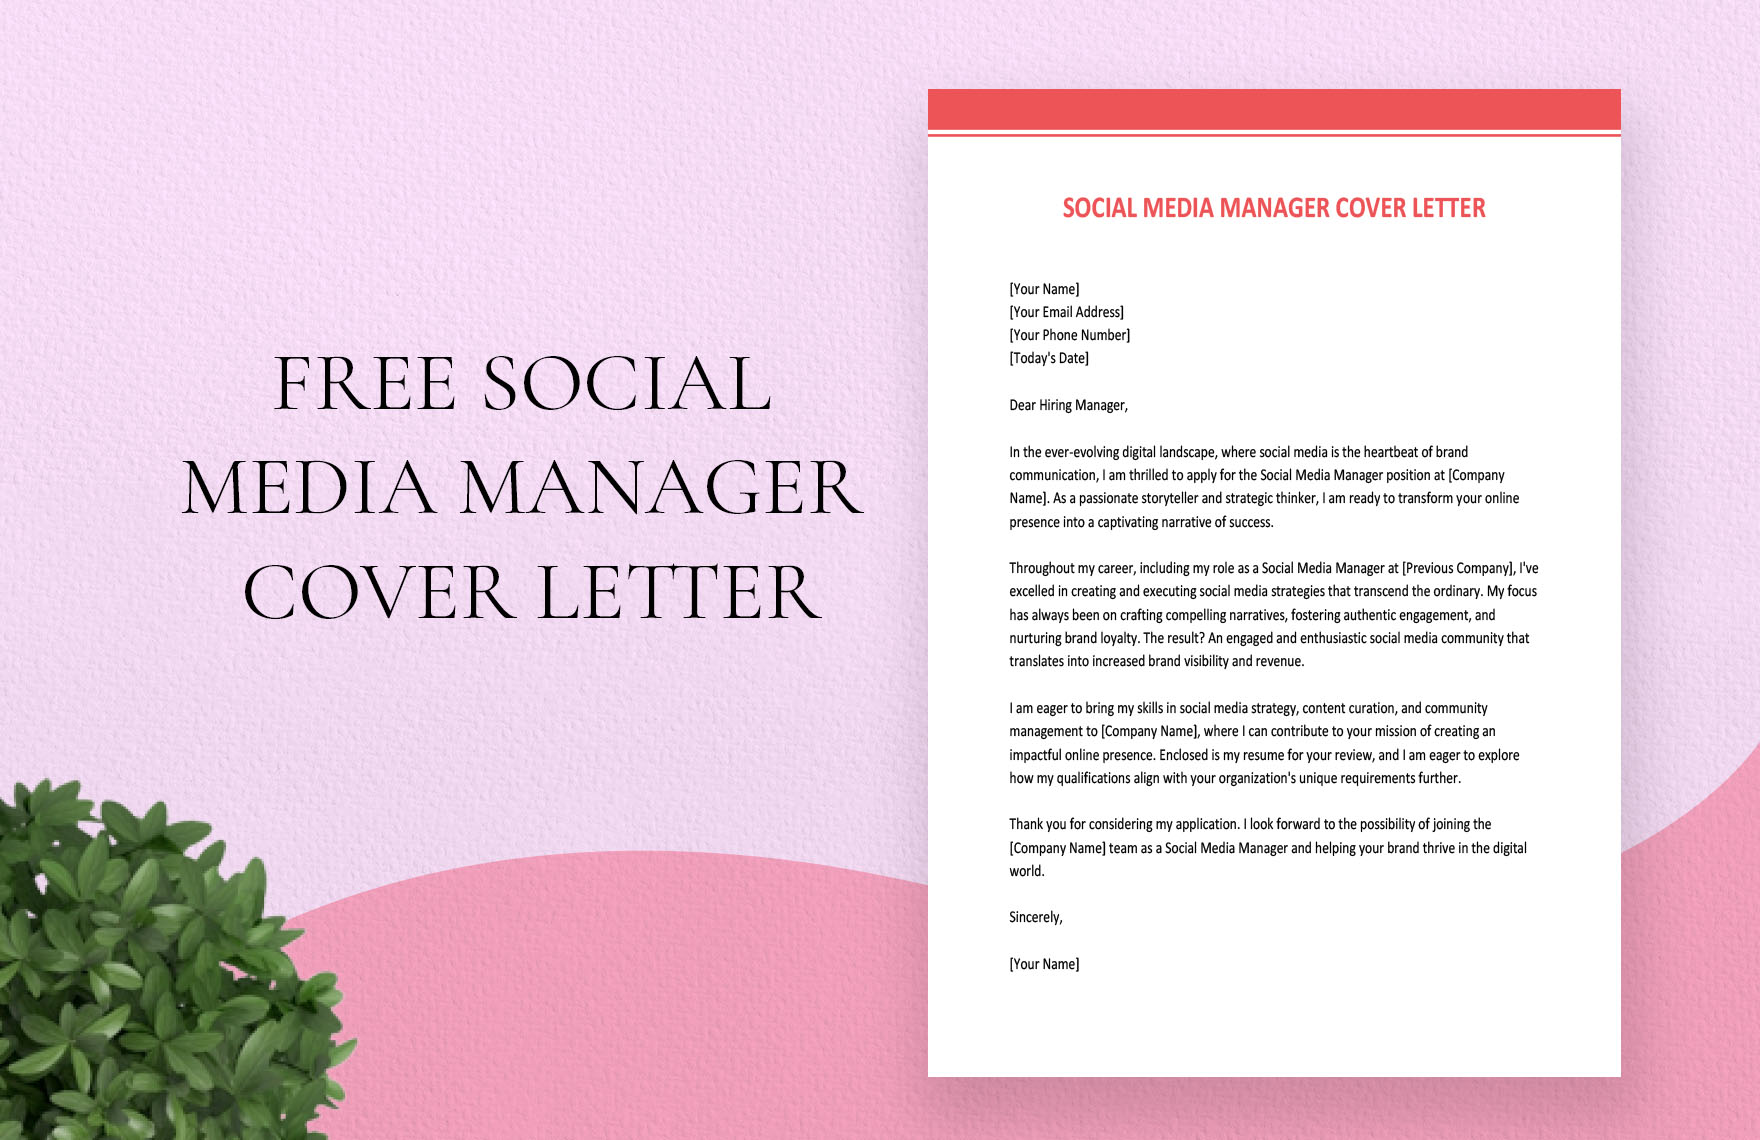 Social Media Manager Cover Letter in Word, Google Docs